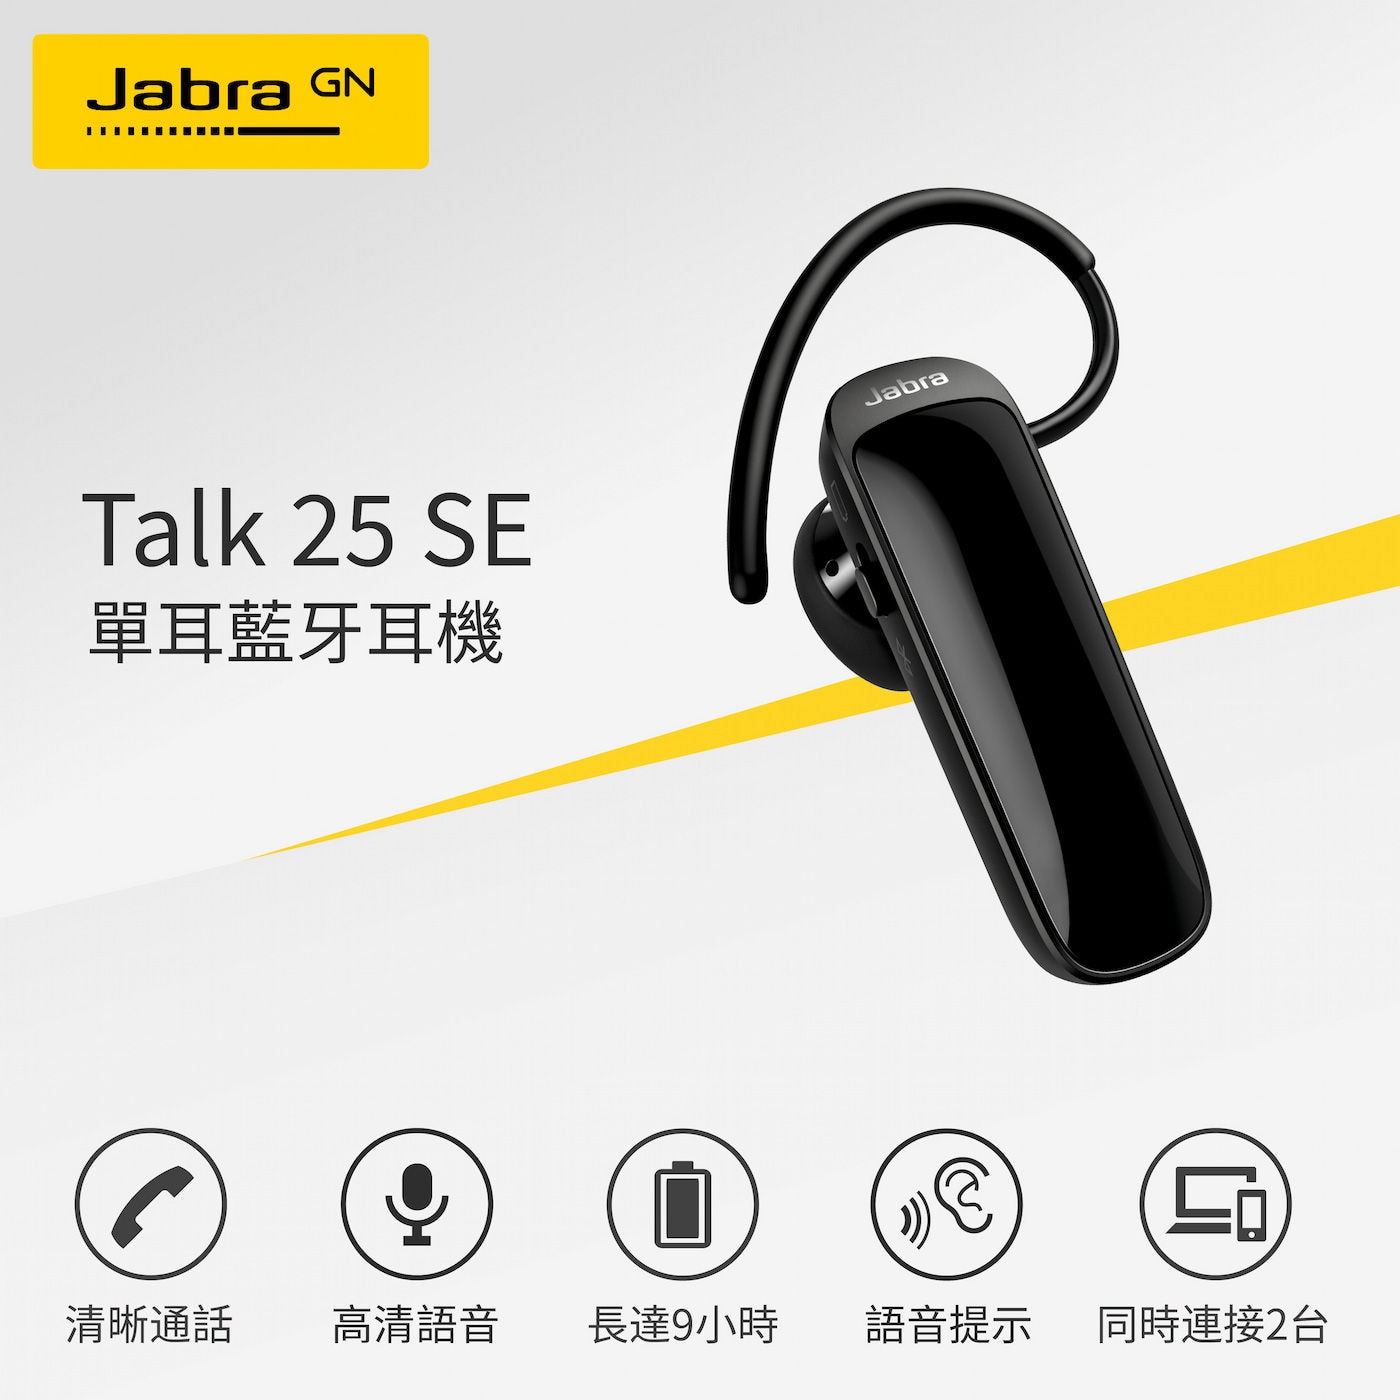 Jabra Talk 25 SE 立體聲單耳藍牙耳機，藍牙5.0晶片，連線傳輸更穩定。HD Voice 通話技術，顯著提升通話品質。8.2 公克超輕重量，方便配戴。